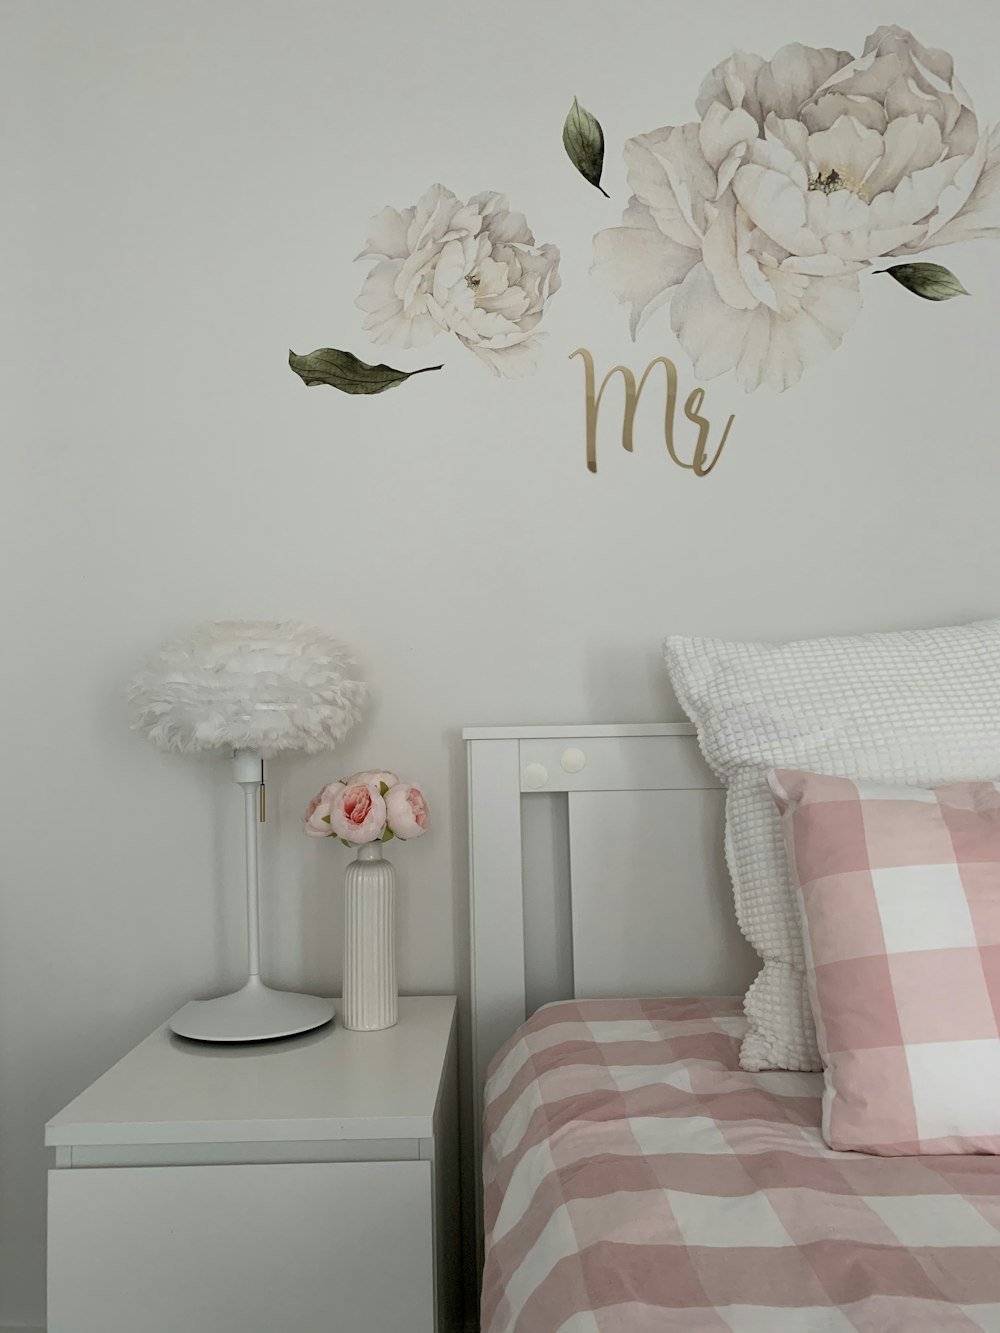 floral arrangements on nightstand beside bed